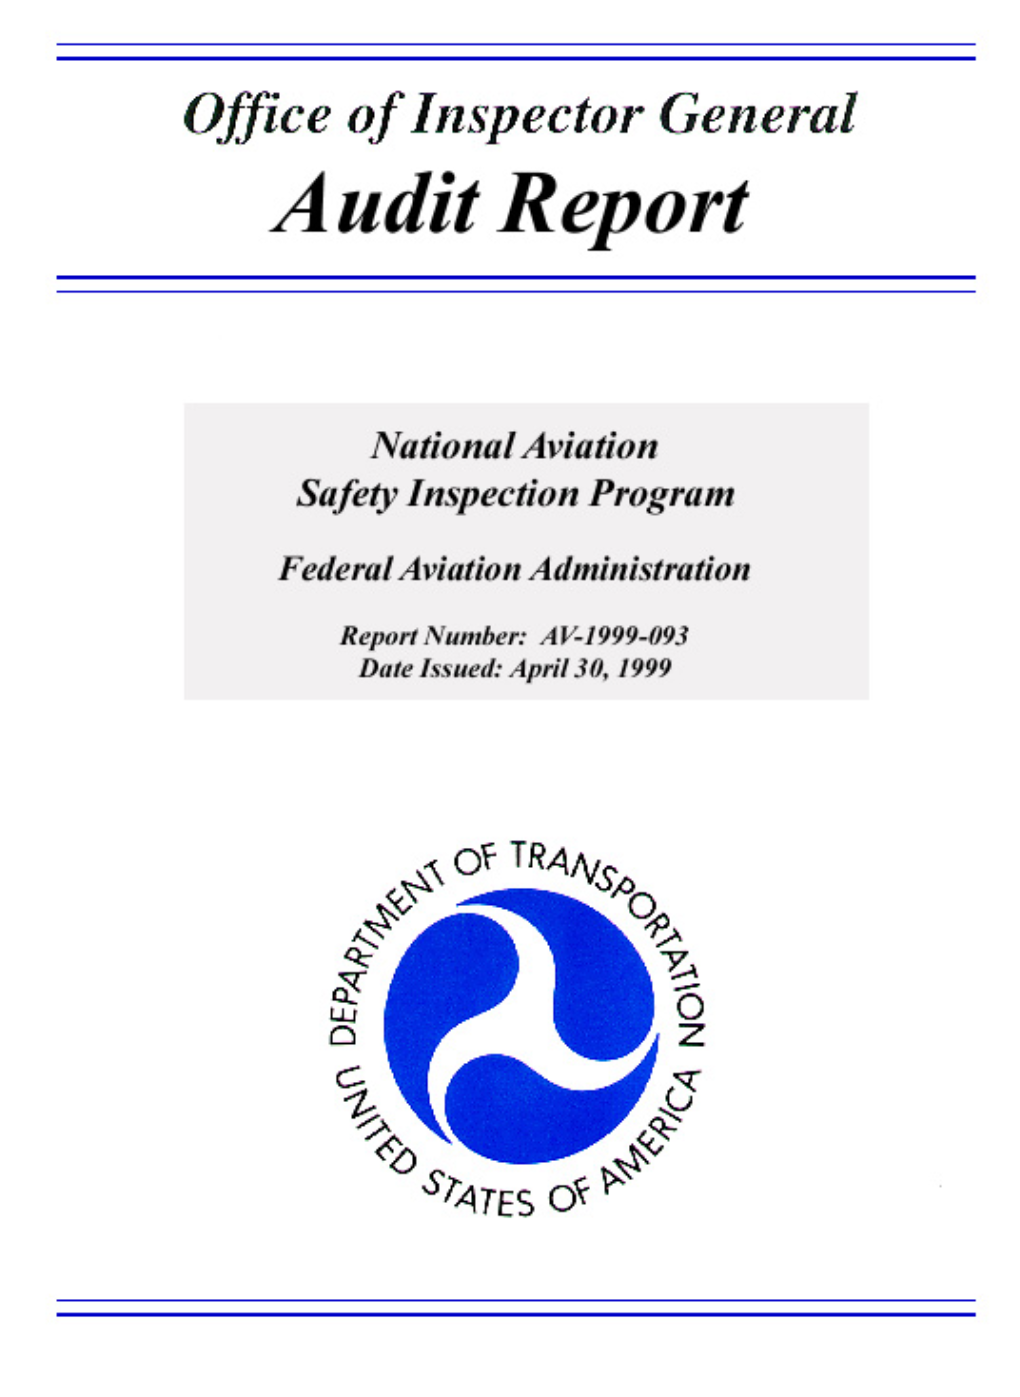 National Aviation Safety Inspection Program Federal Aviation Administration